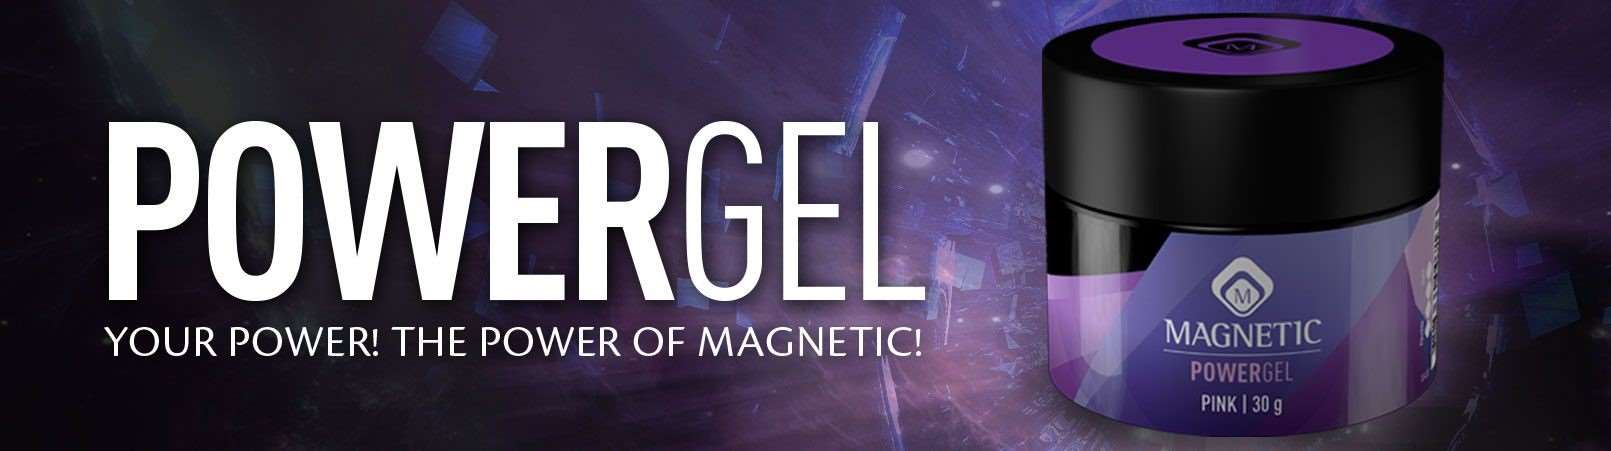 Powergel van Magnetic nu bij Kat's Nails Gorinchem - Nagelstudio Gorinchem Kat's Nails